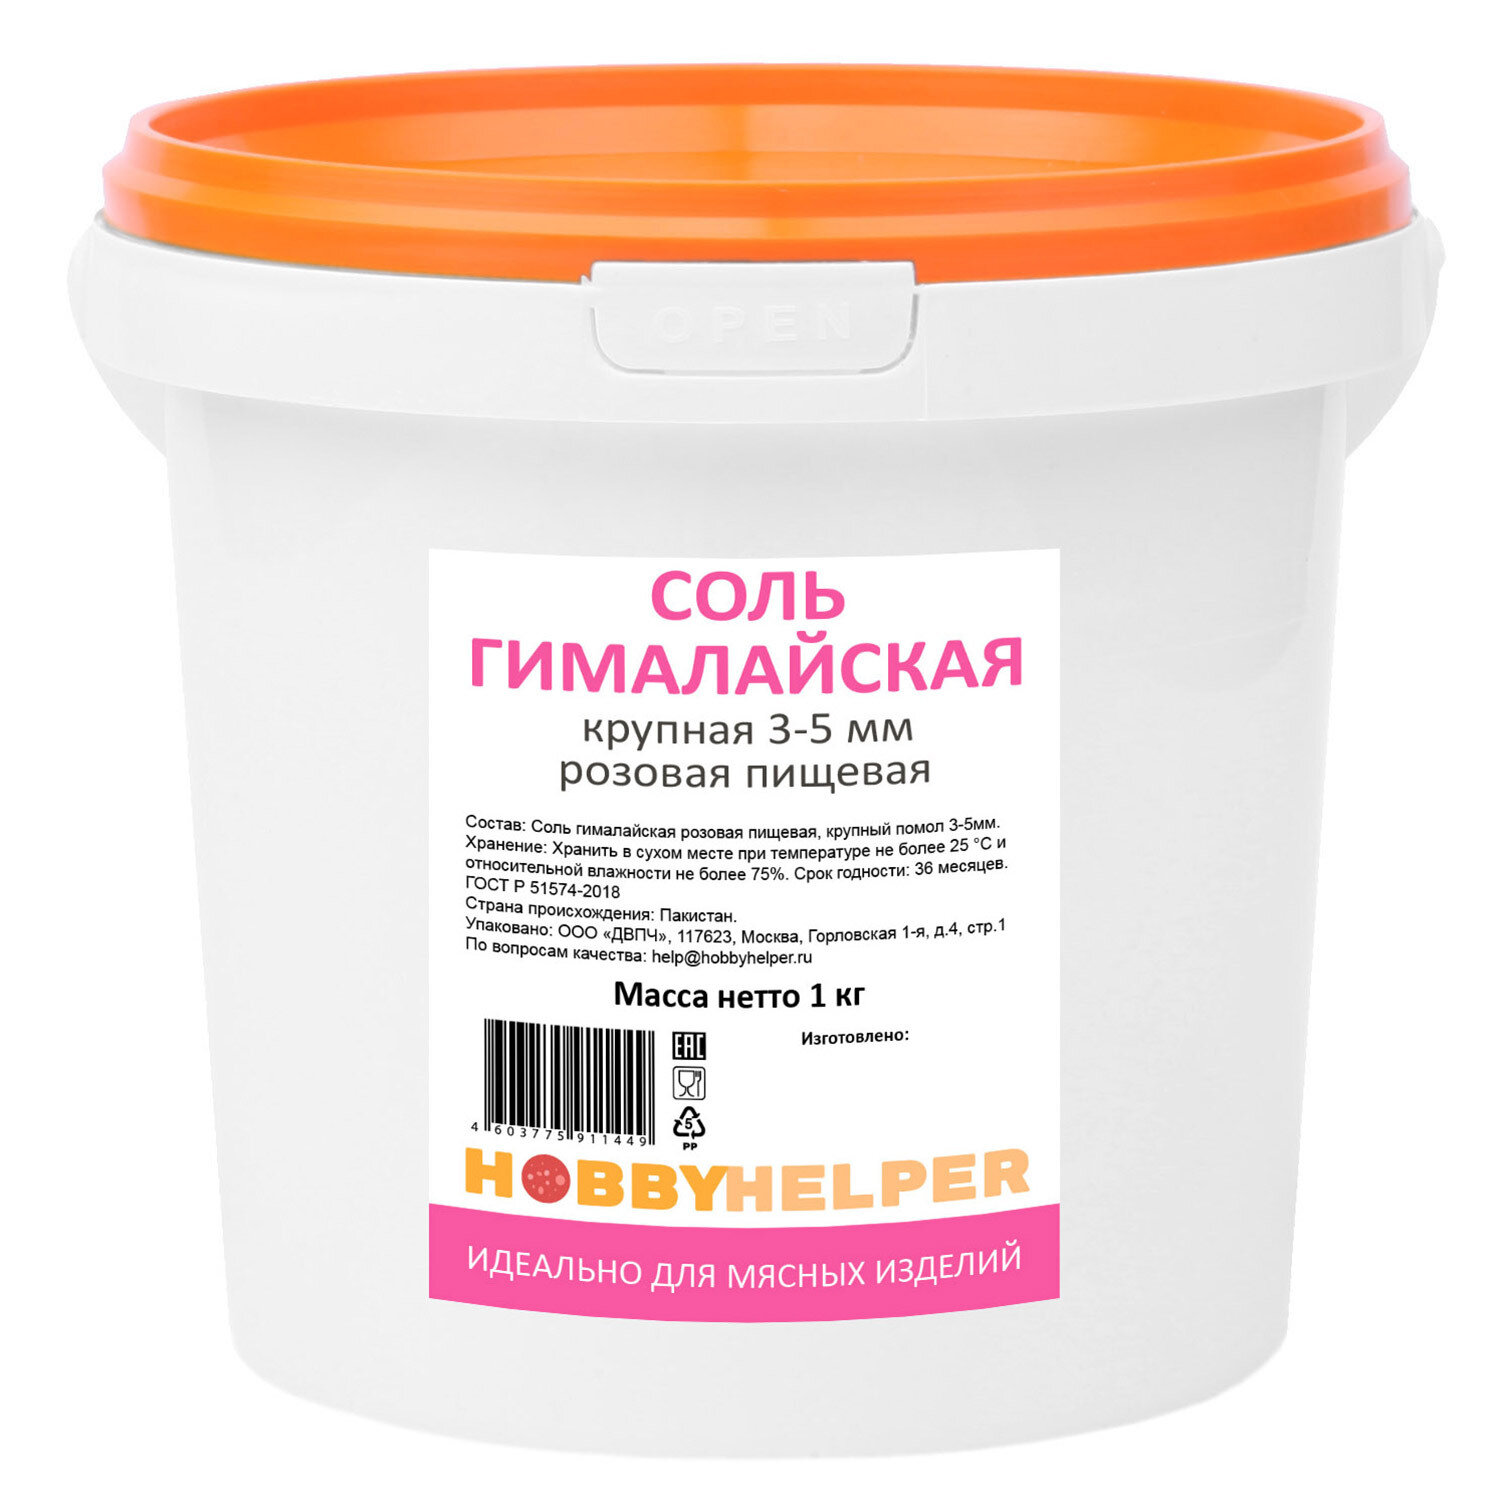 Соль гималайская розовая № 1 (крупная 3-5 мм) HOBBYHELPER в ведре (1кг)